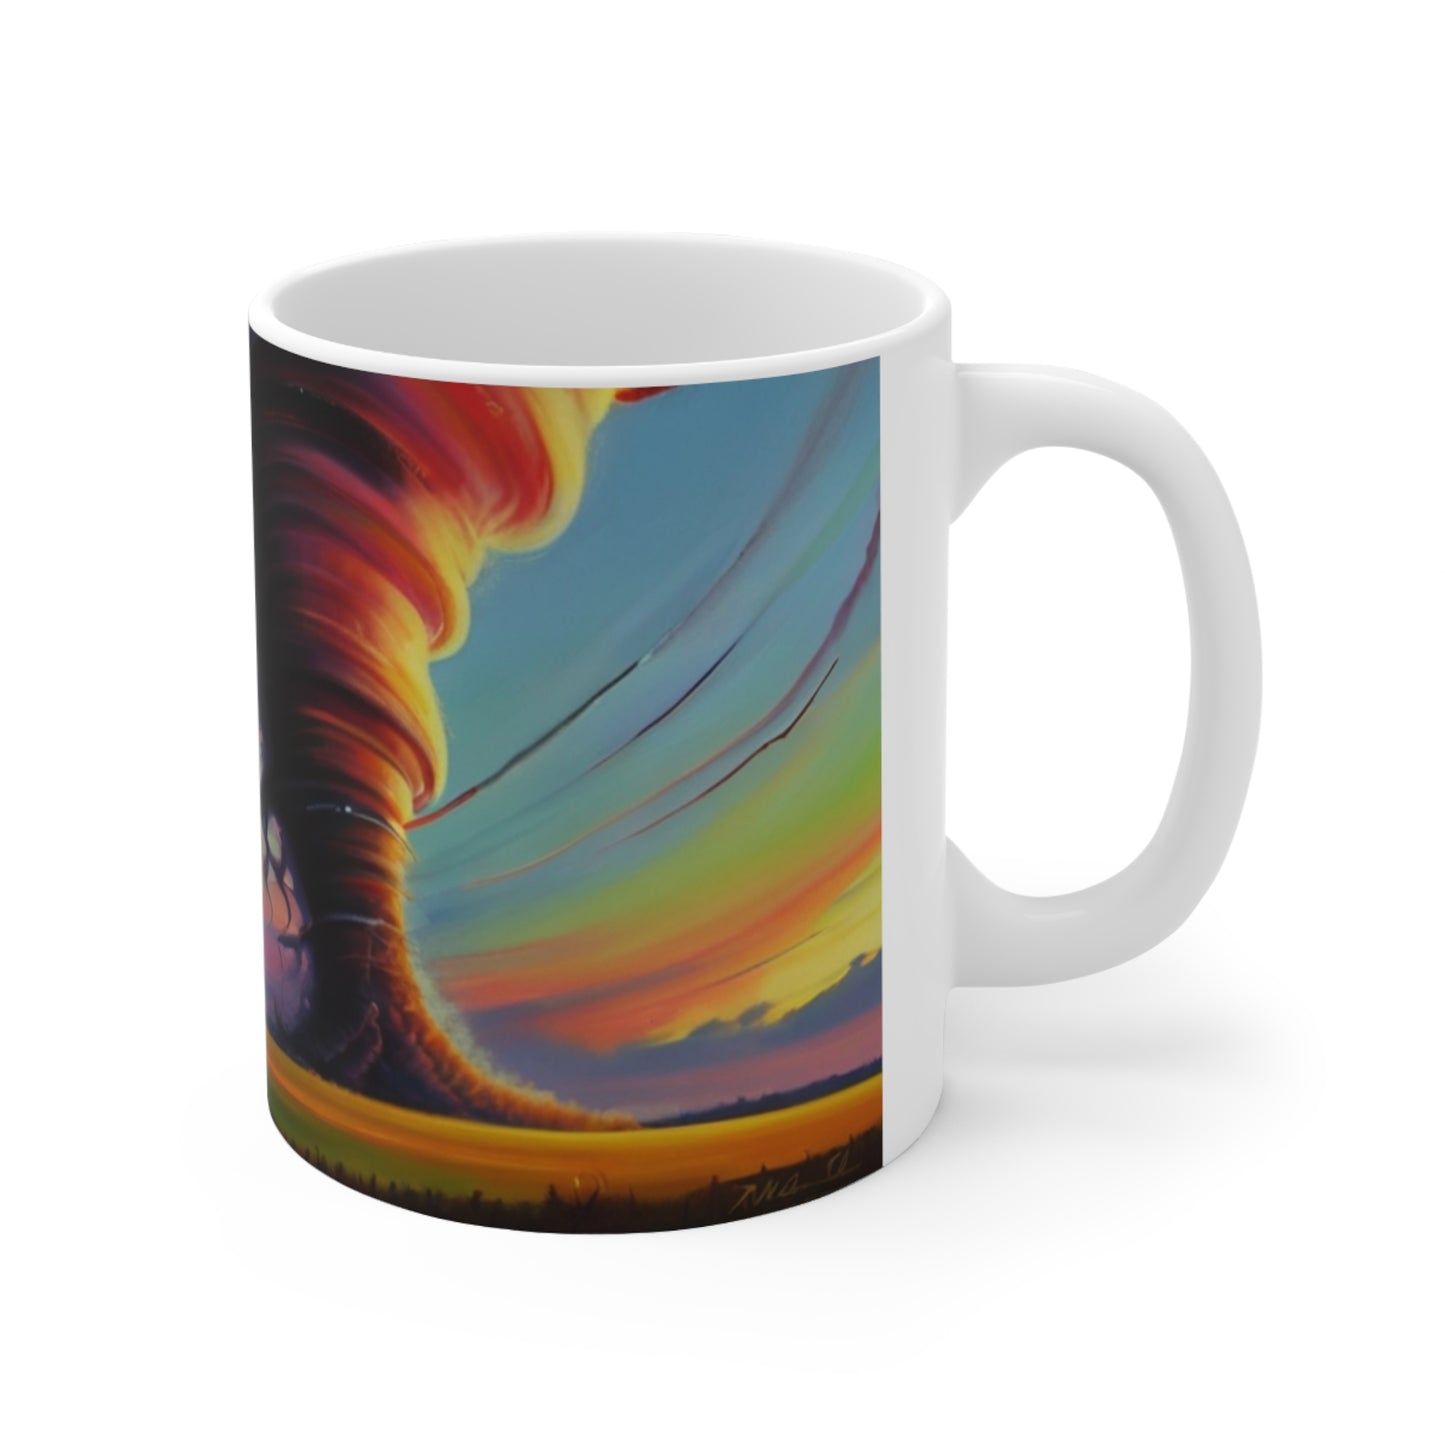 Tornado Approaching Small Village - Ceramic Coffee Mug 11oz